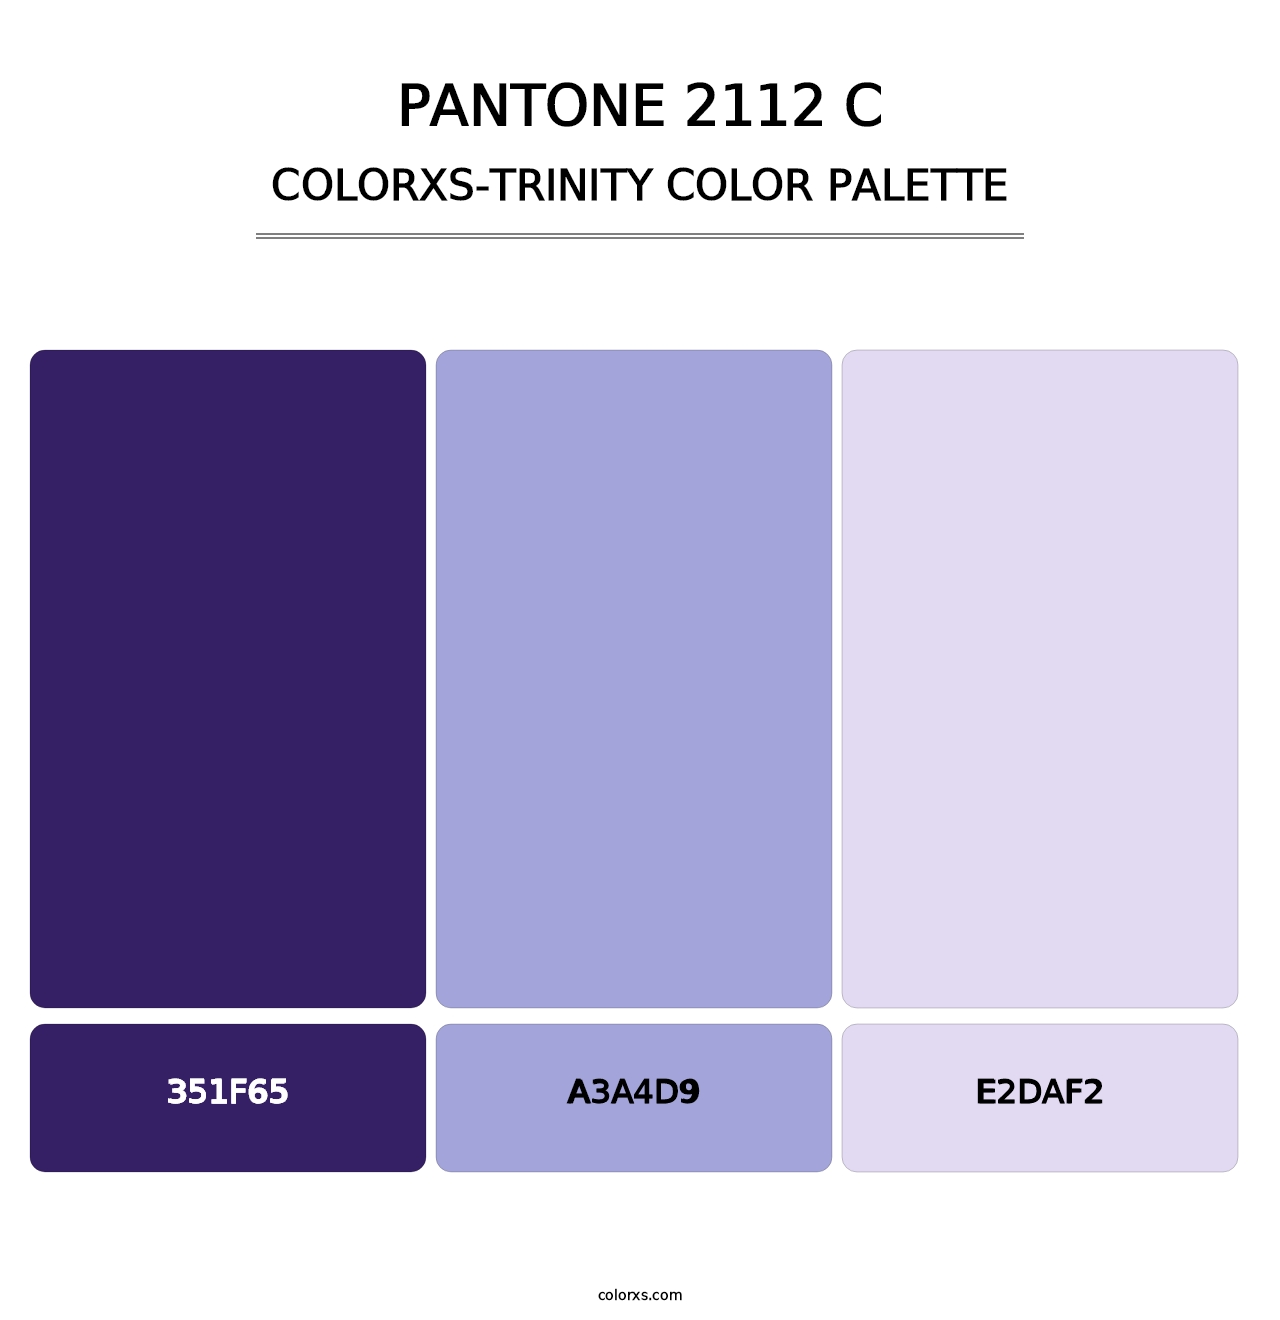 PANTONE 2112 C - Colorxs Trinity Palette